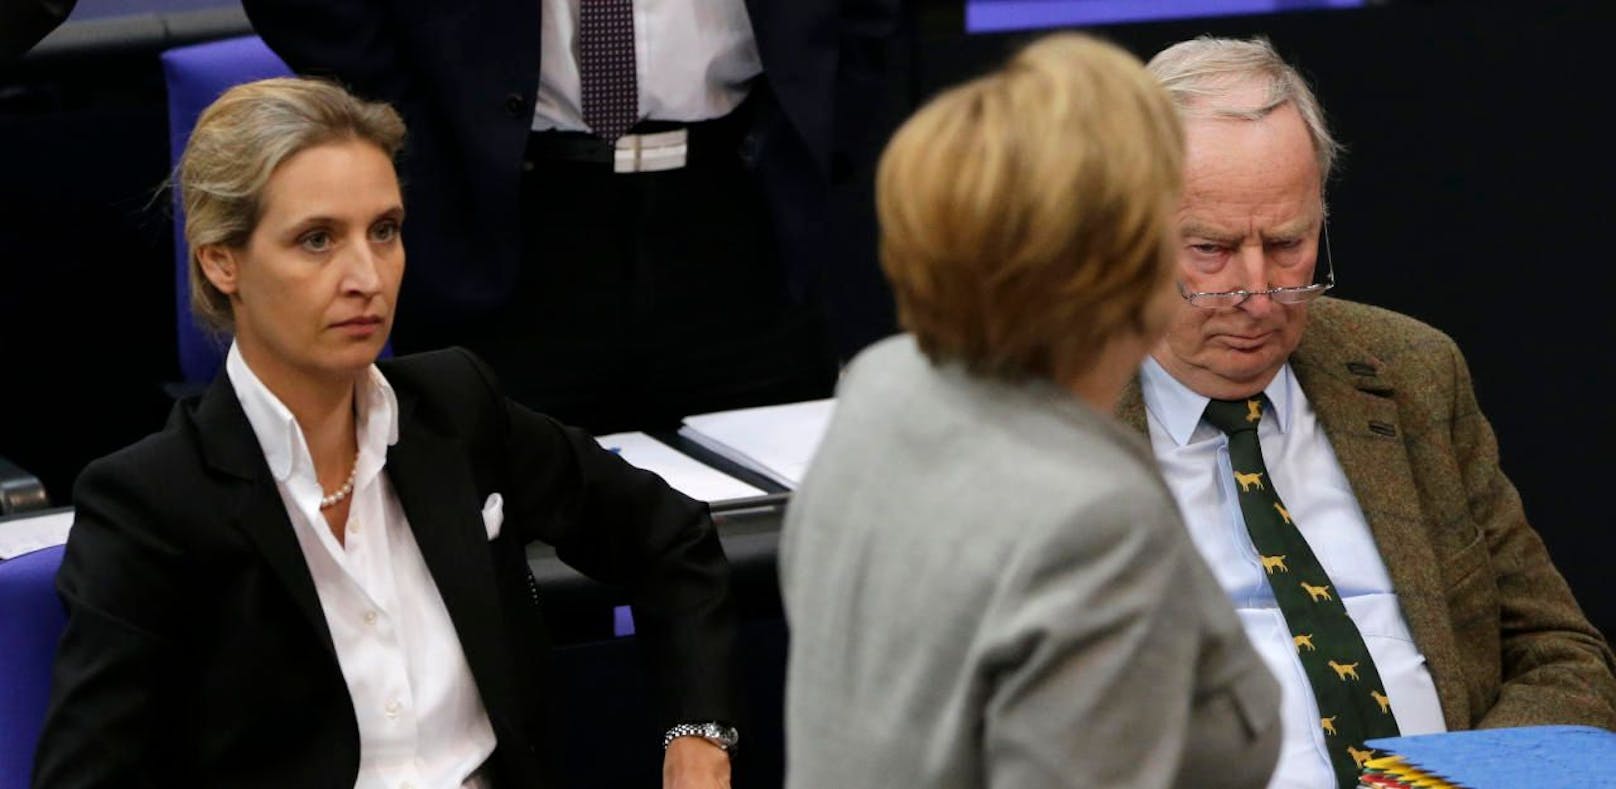 Merkel verliert den Rückhalt, die AfD im Aufwind.